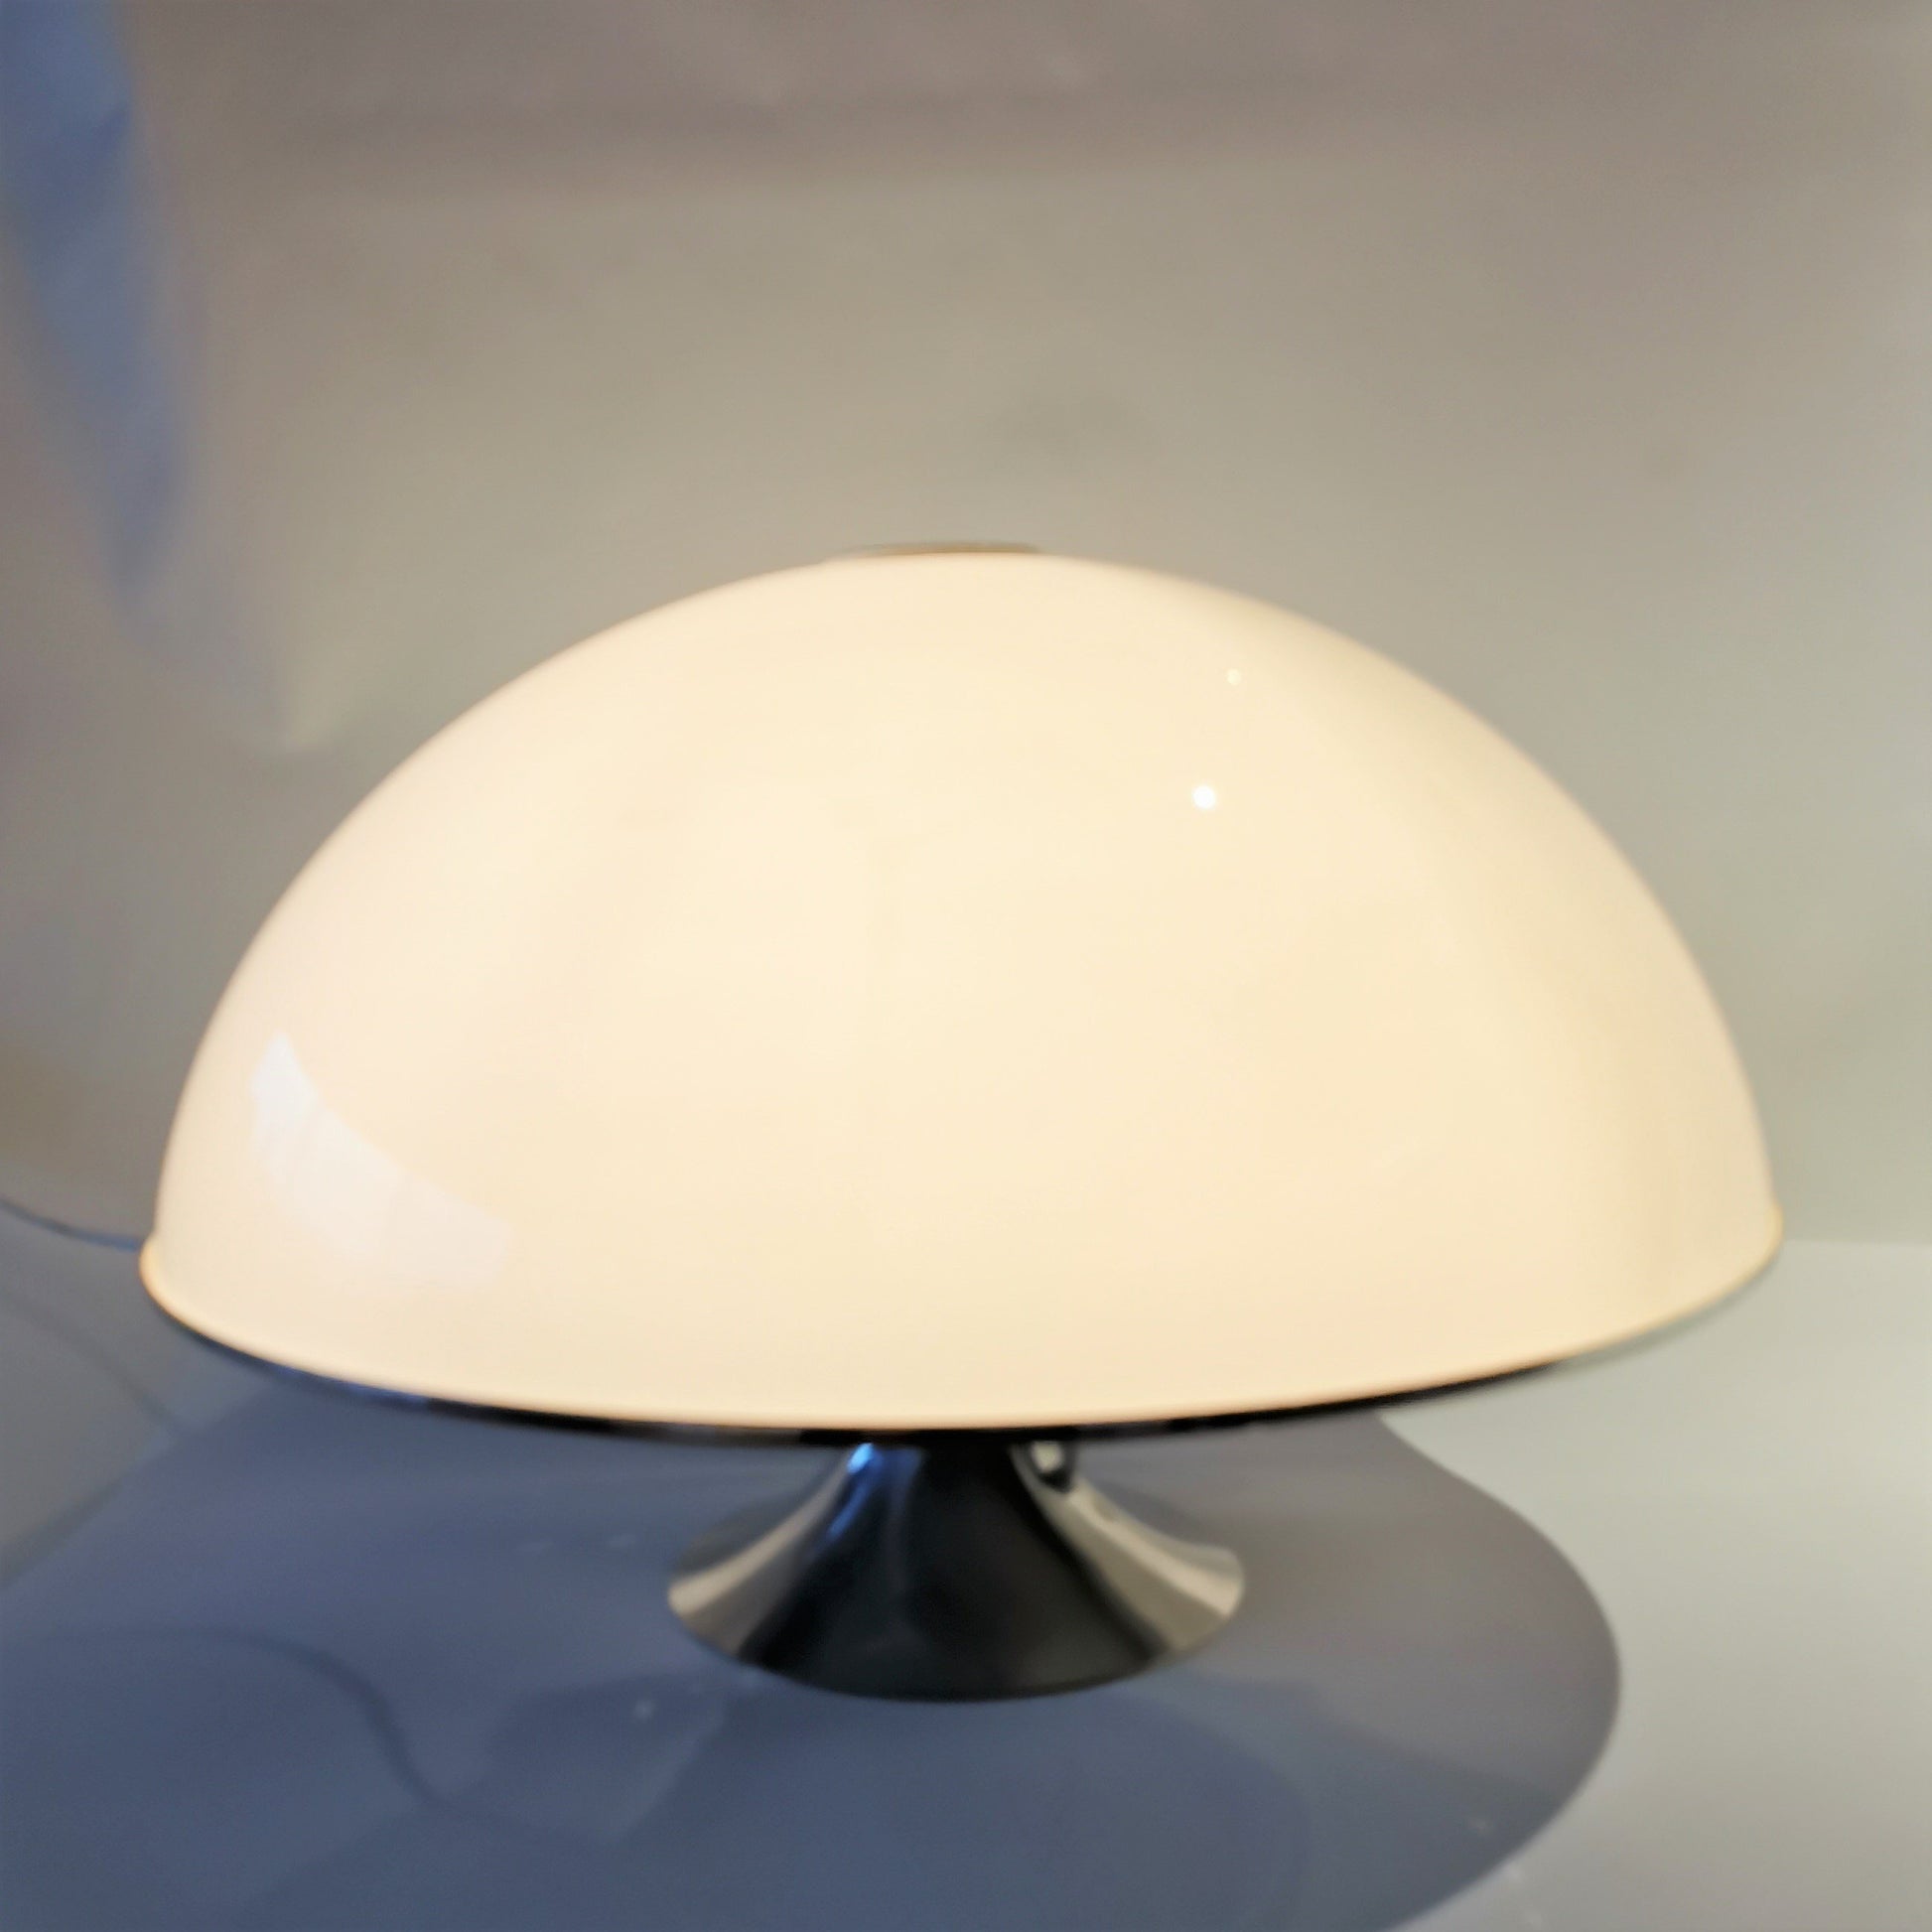 Vintage Design Tischlampe um 1970 Lampen Vintage um 1970 